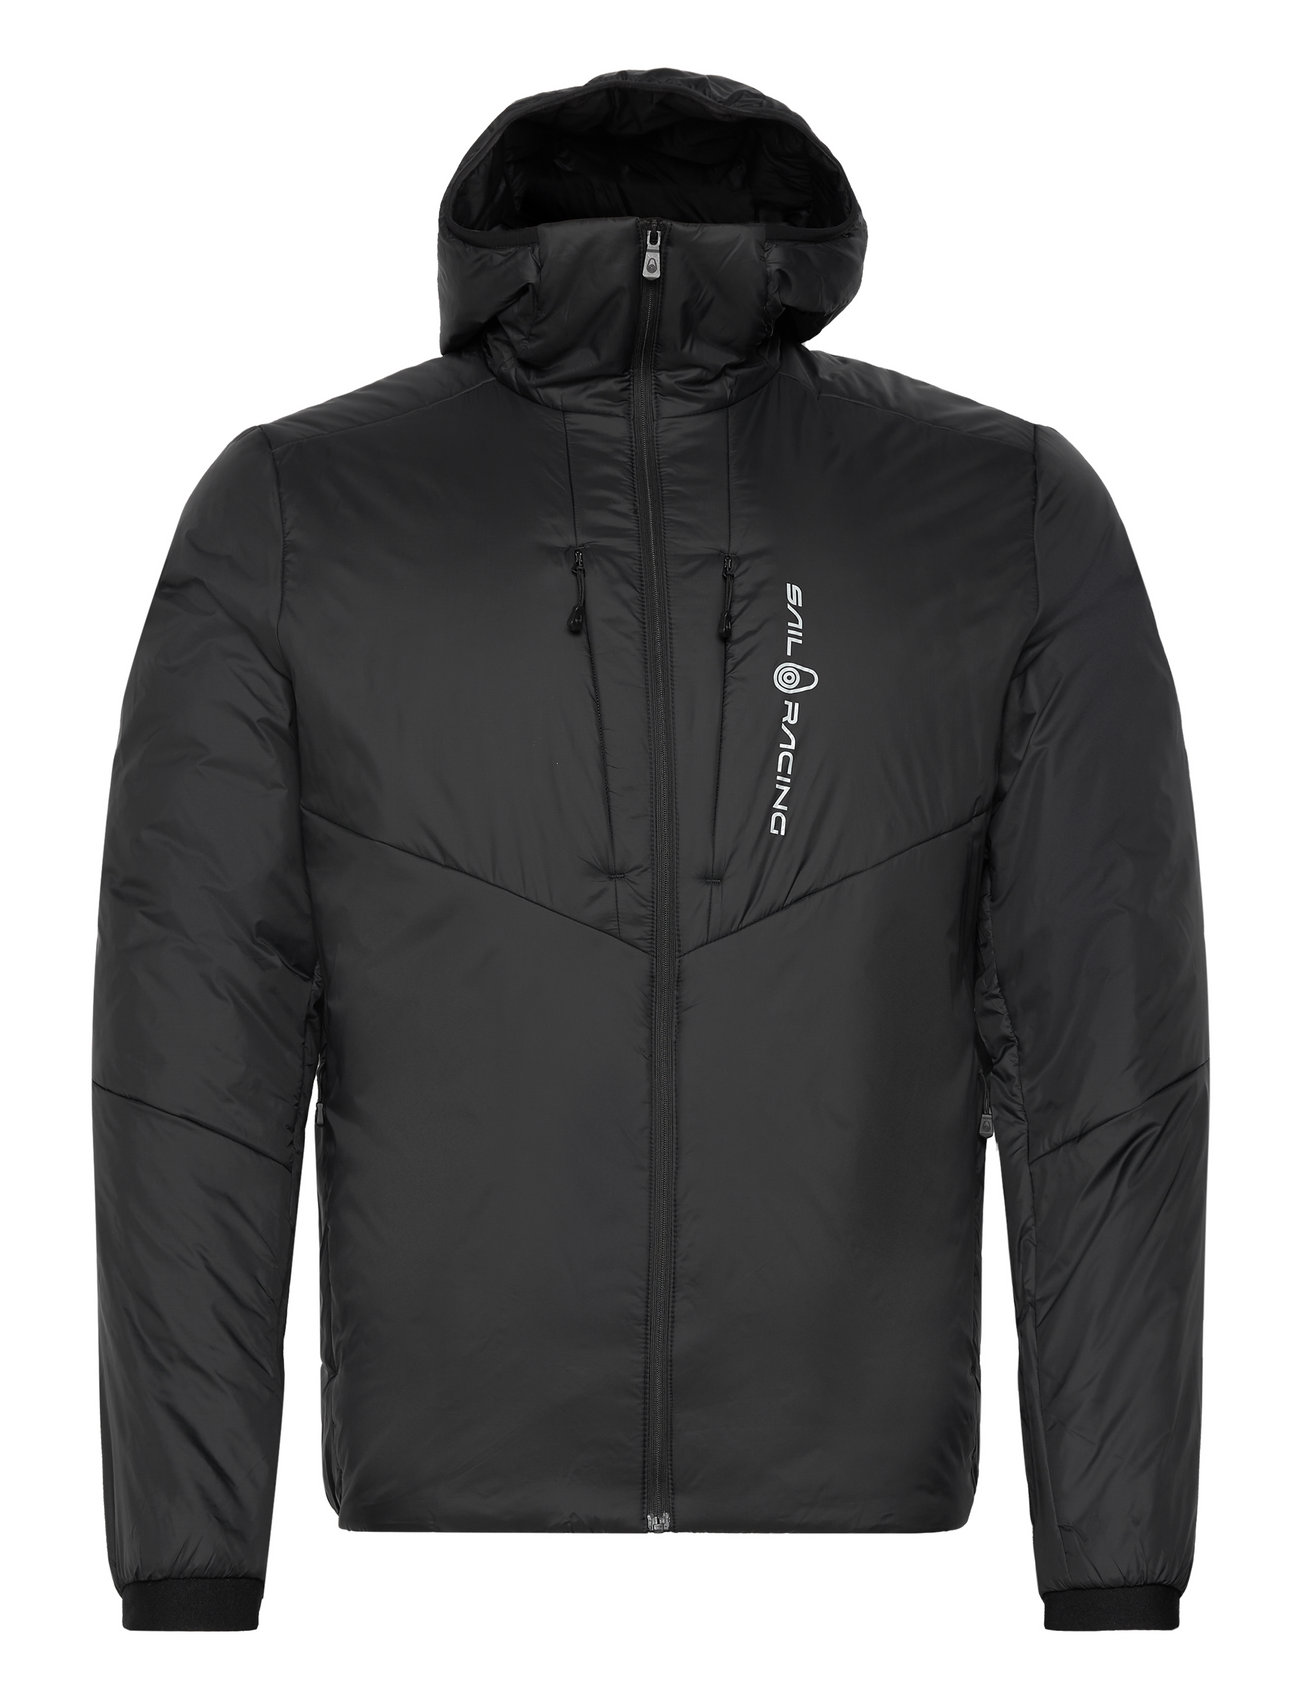 Sail Racing Spray Primaloft Jacket - Sports jackets | Boozt.com